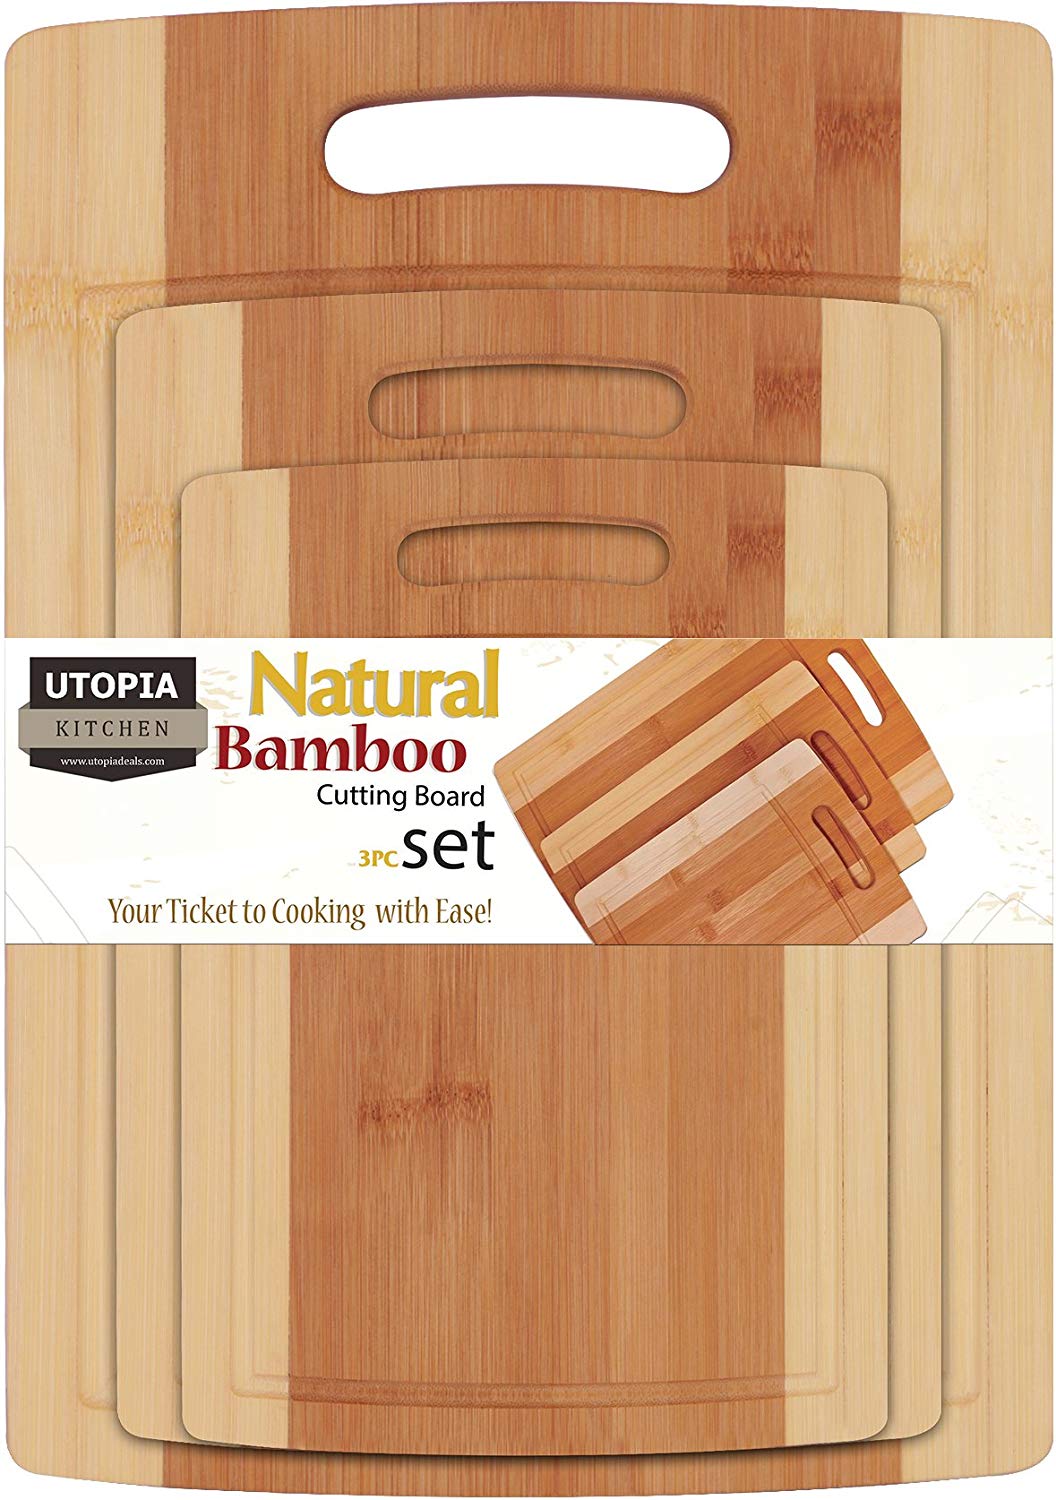 Utopia Kitchen Bamboo Cutting Board 3 Piece Set